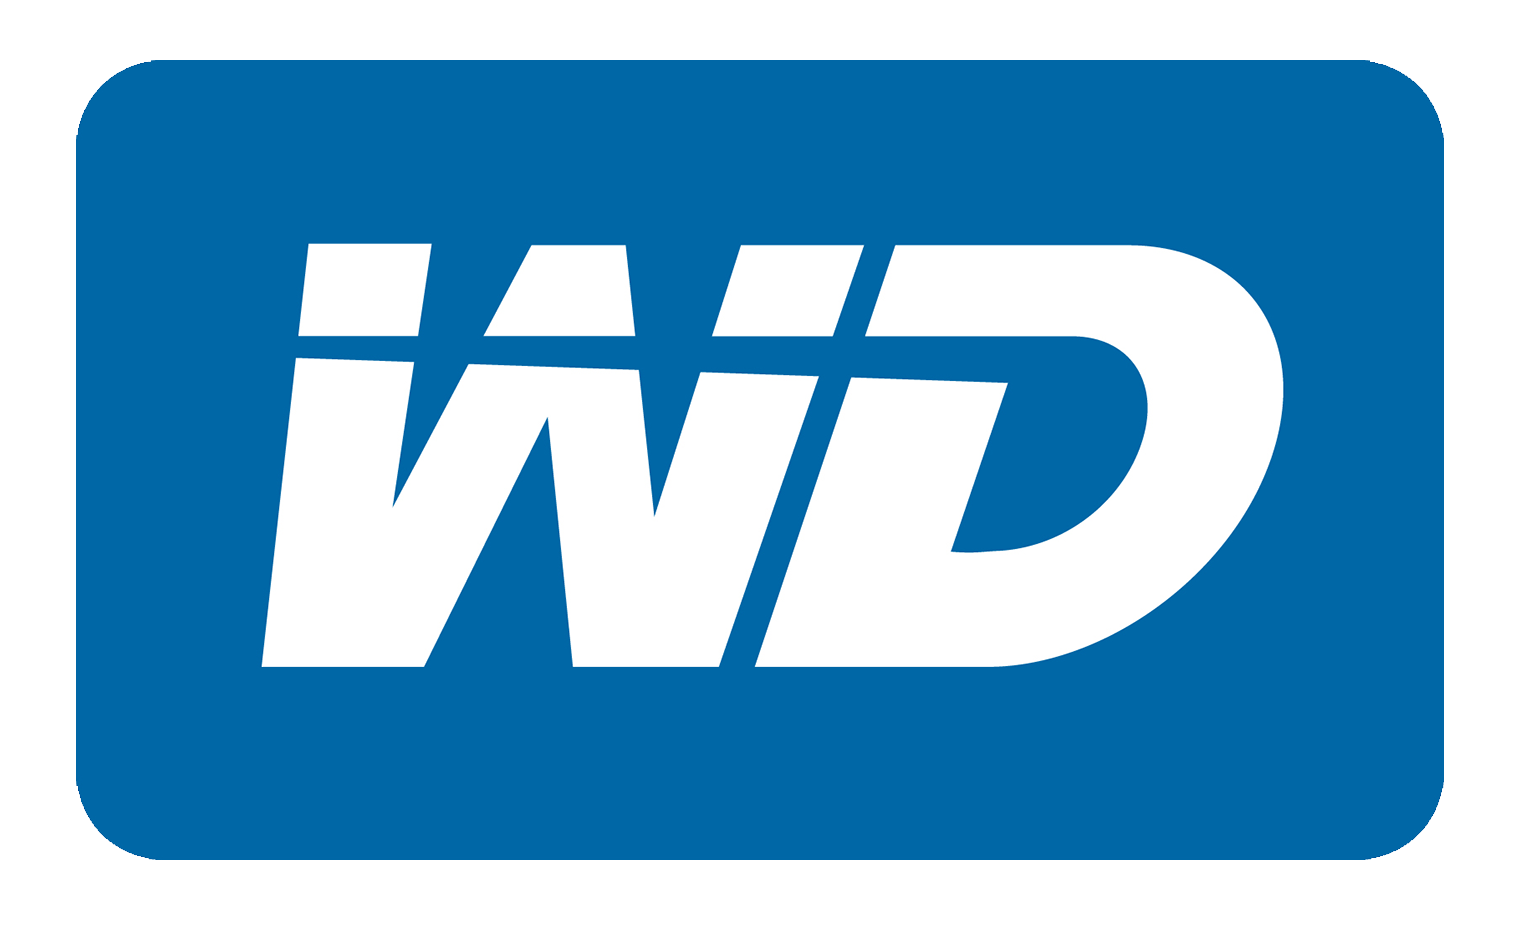 File:Digital Trends logo.svg - Wikipedia